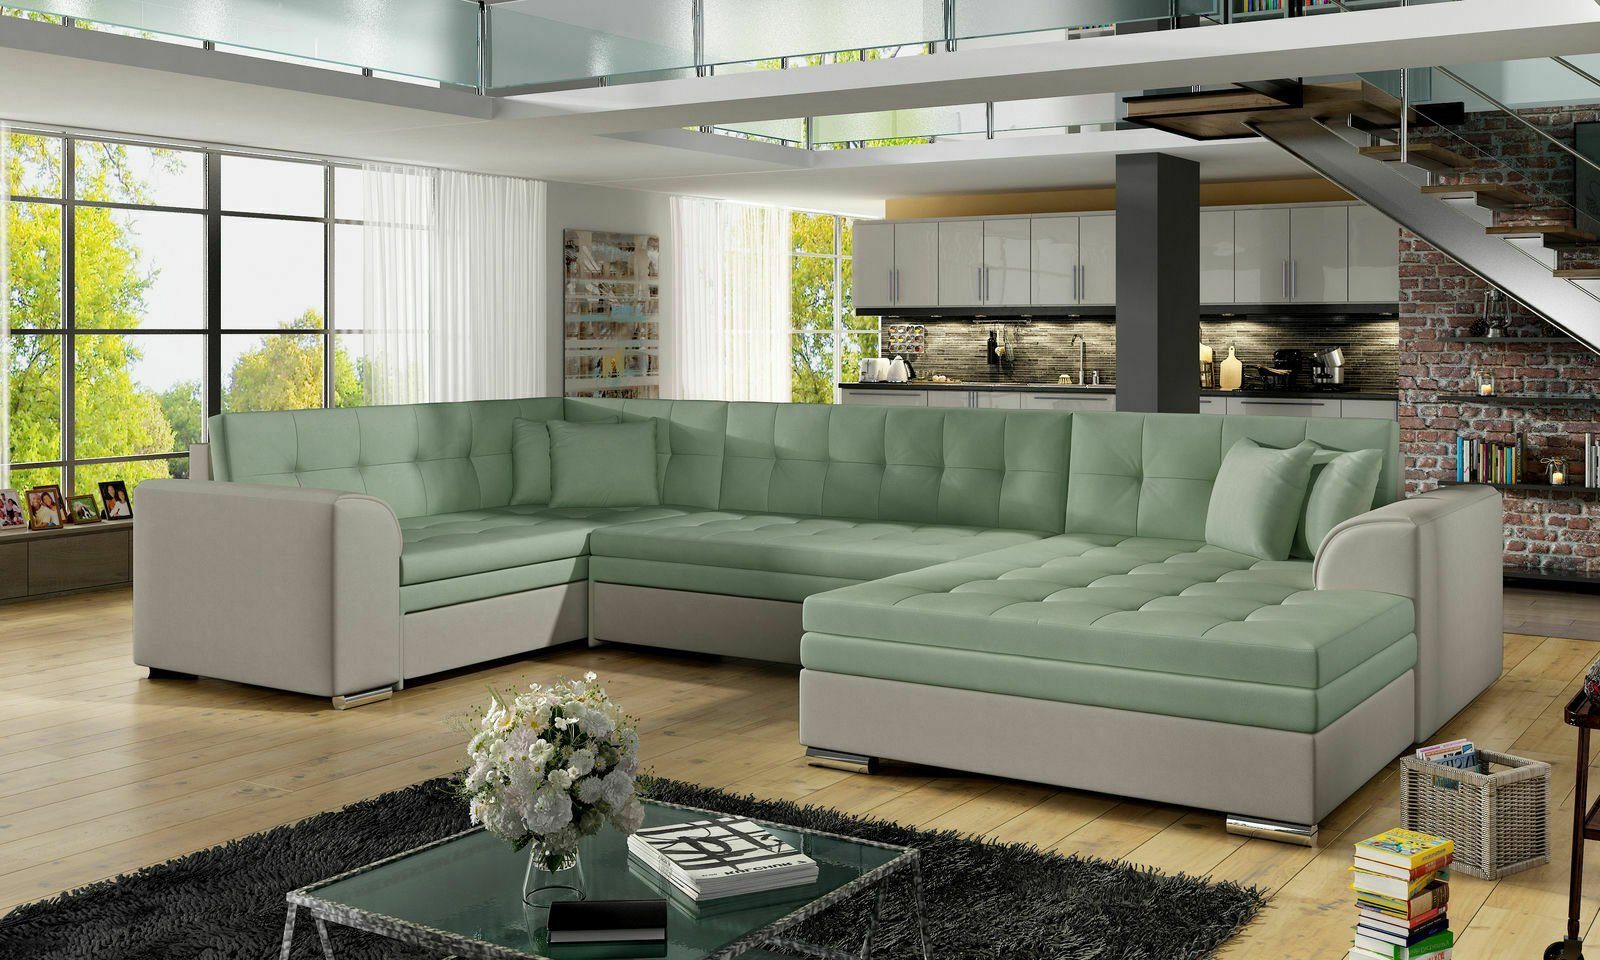 JVmoebel Ecksofa Design Ecksofa Schlafsofa Bettfunktion Couch Leder Textil Polster, Mit Bettfunktion Grün/Grau